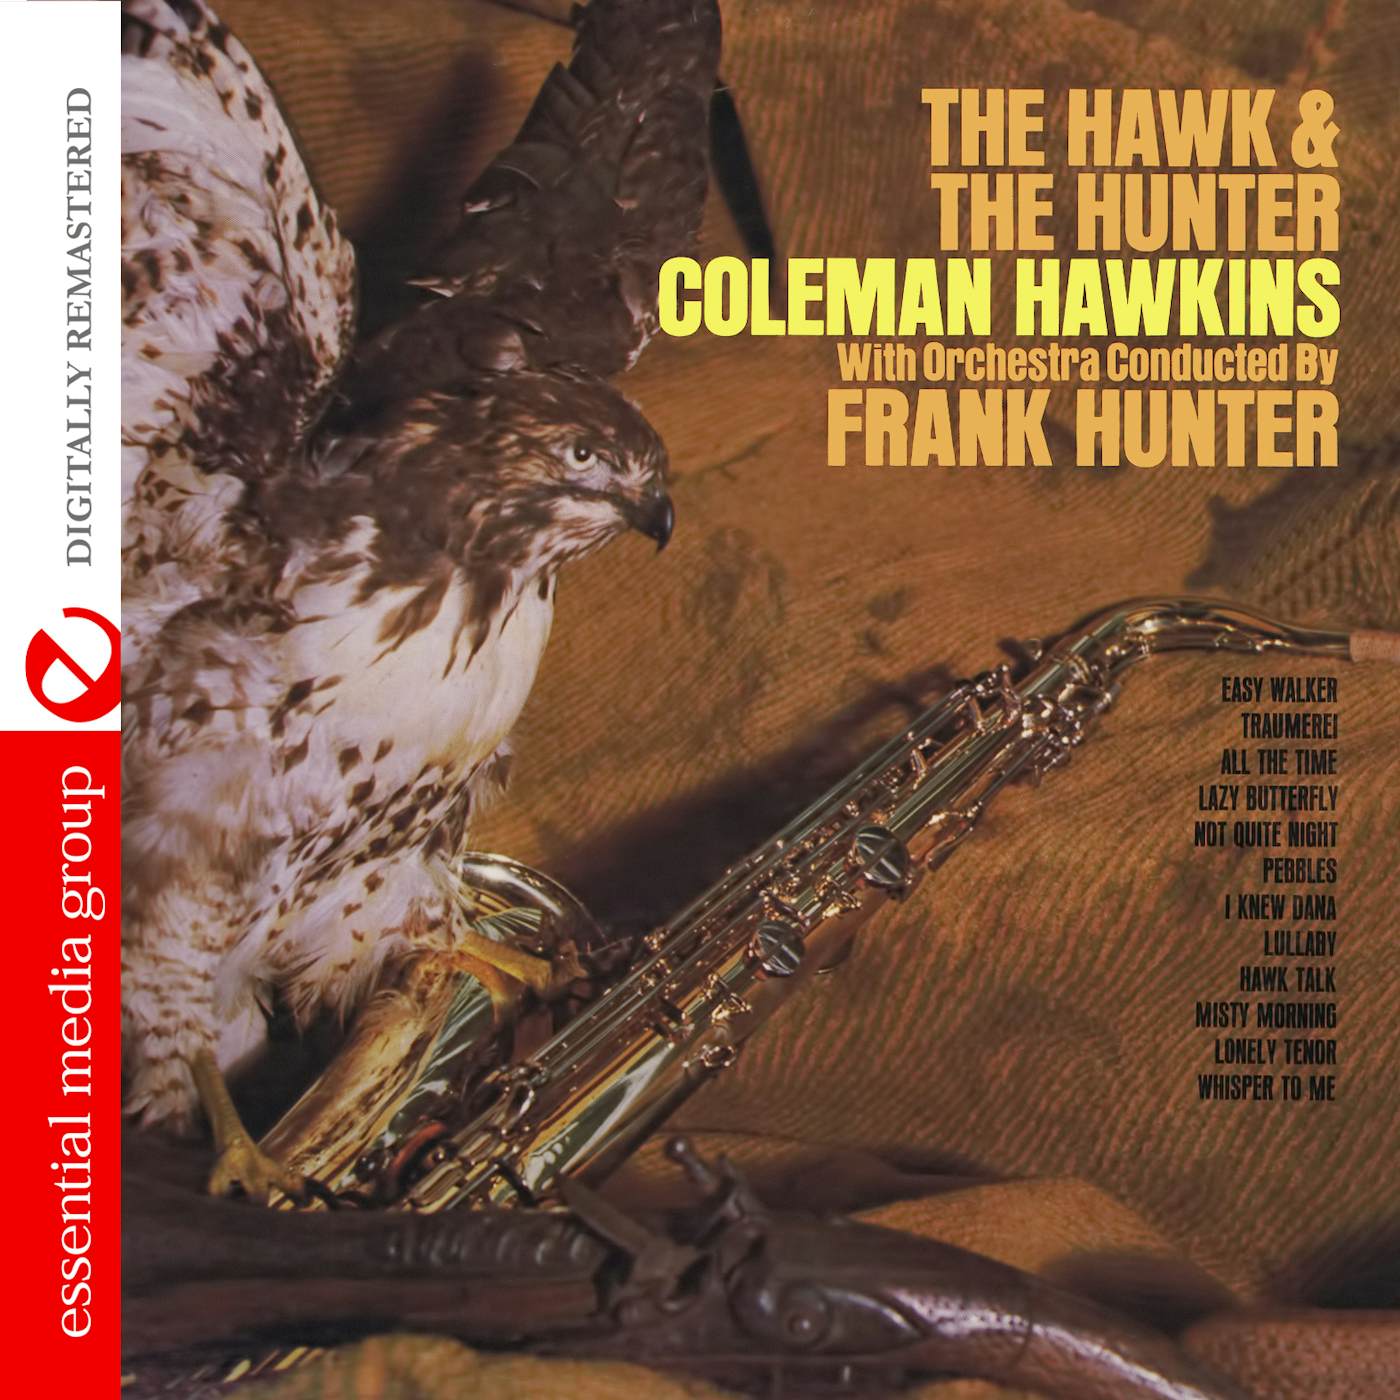 Coleman Hawkins HAWK & THE HUNTER CD